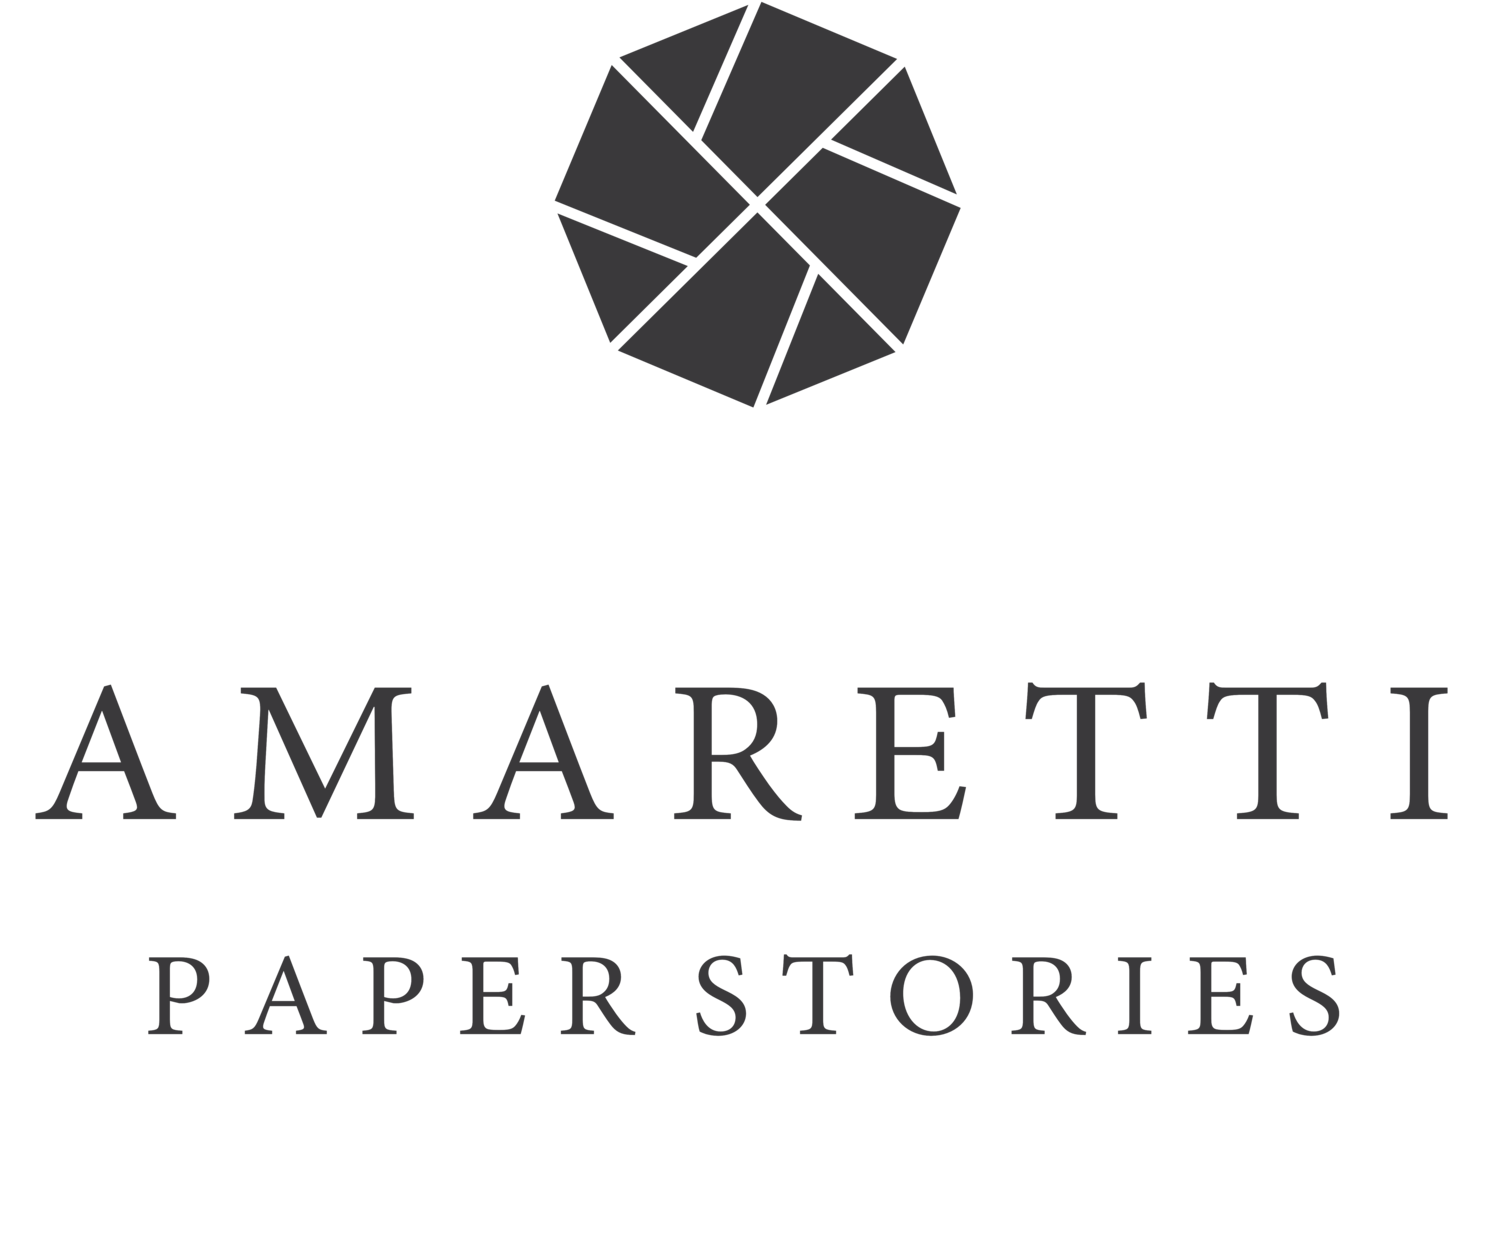 Amaretti | Paper Stories